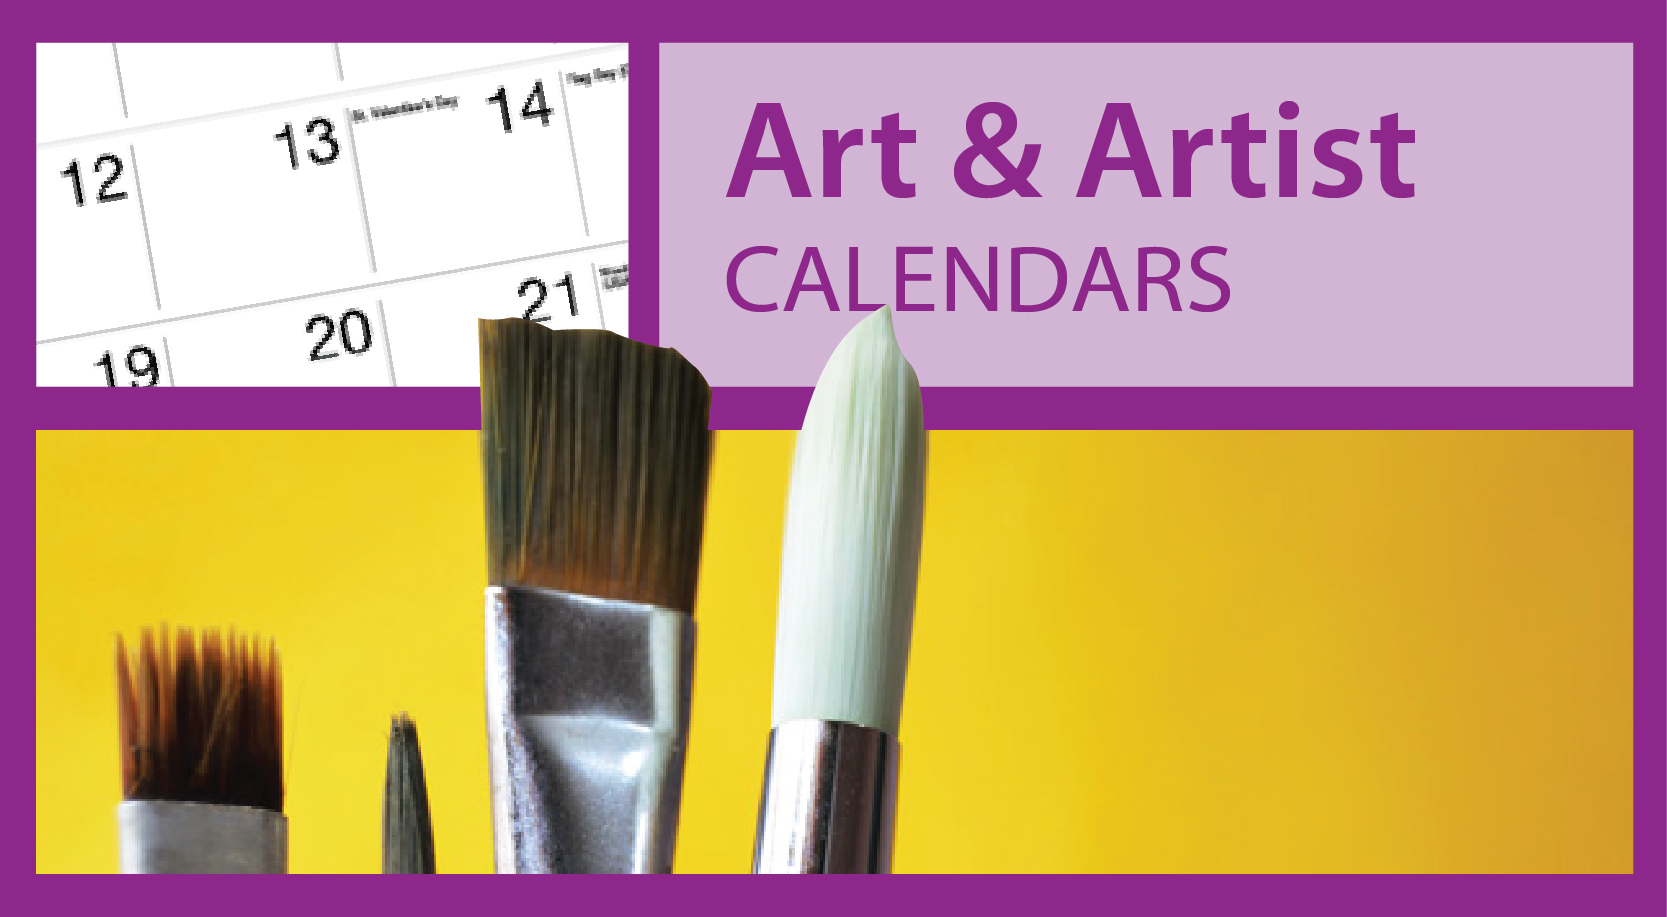 Promotional Art & Artist Calendars https://www.valuecalendars.com/products/standard_imprinted_calendars/promotional_art_calendars